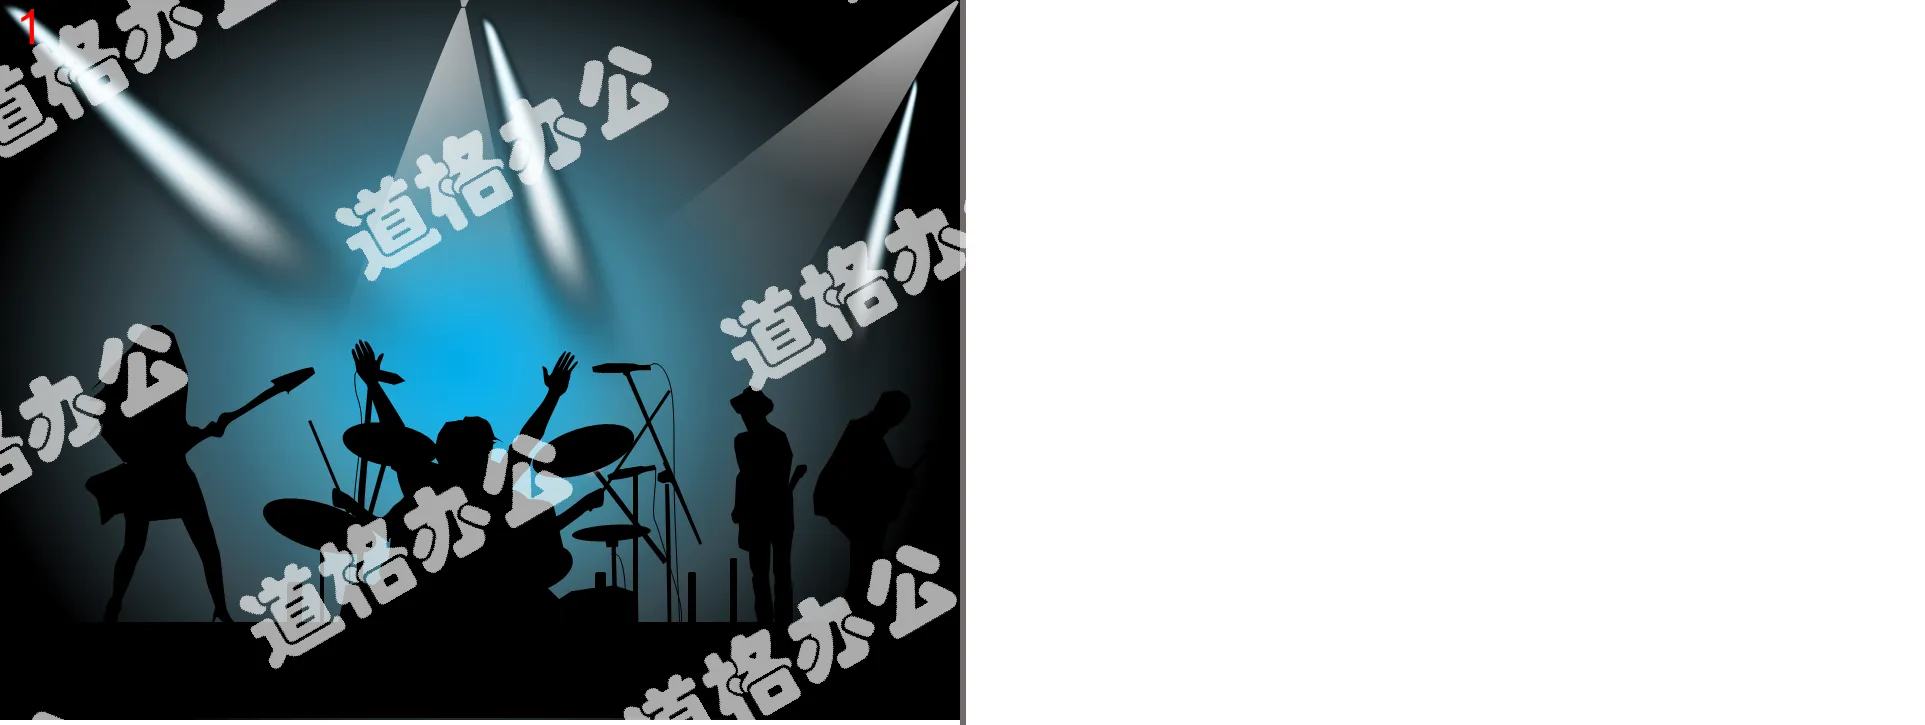 Cartoon concert dynamic PPT background image download